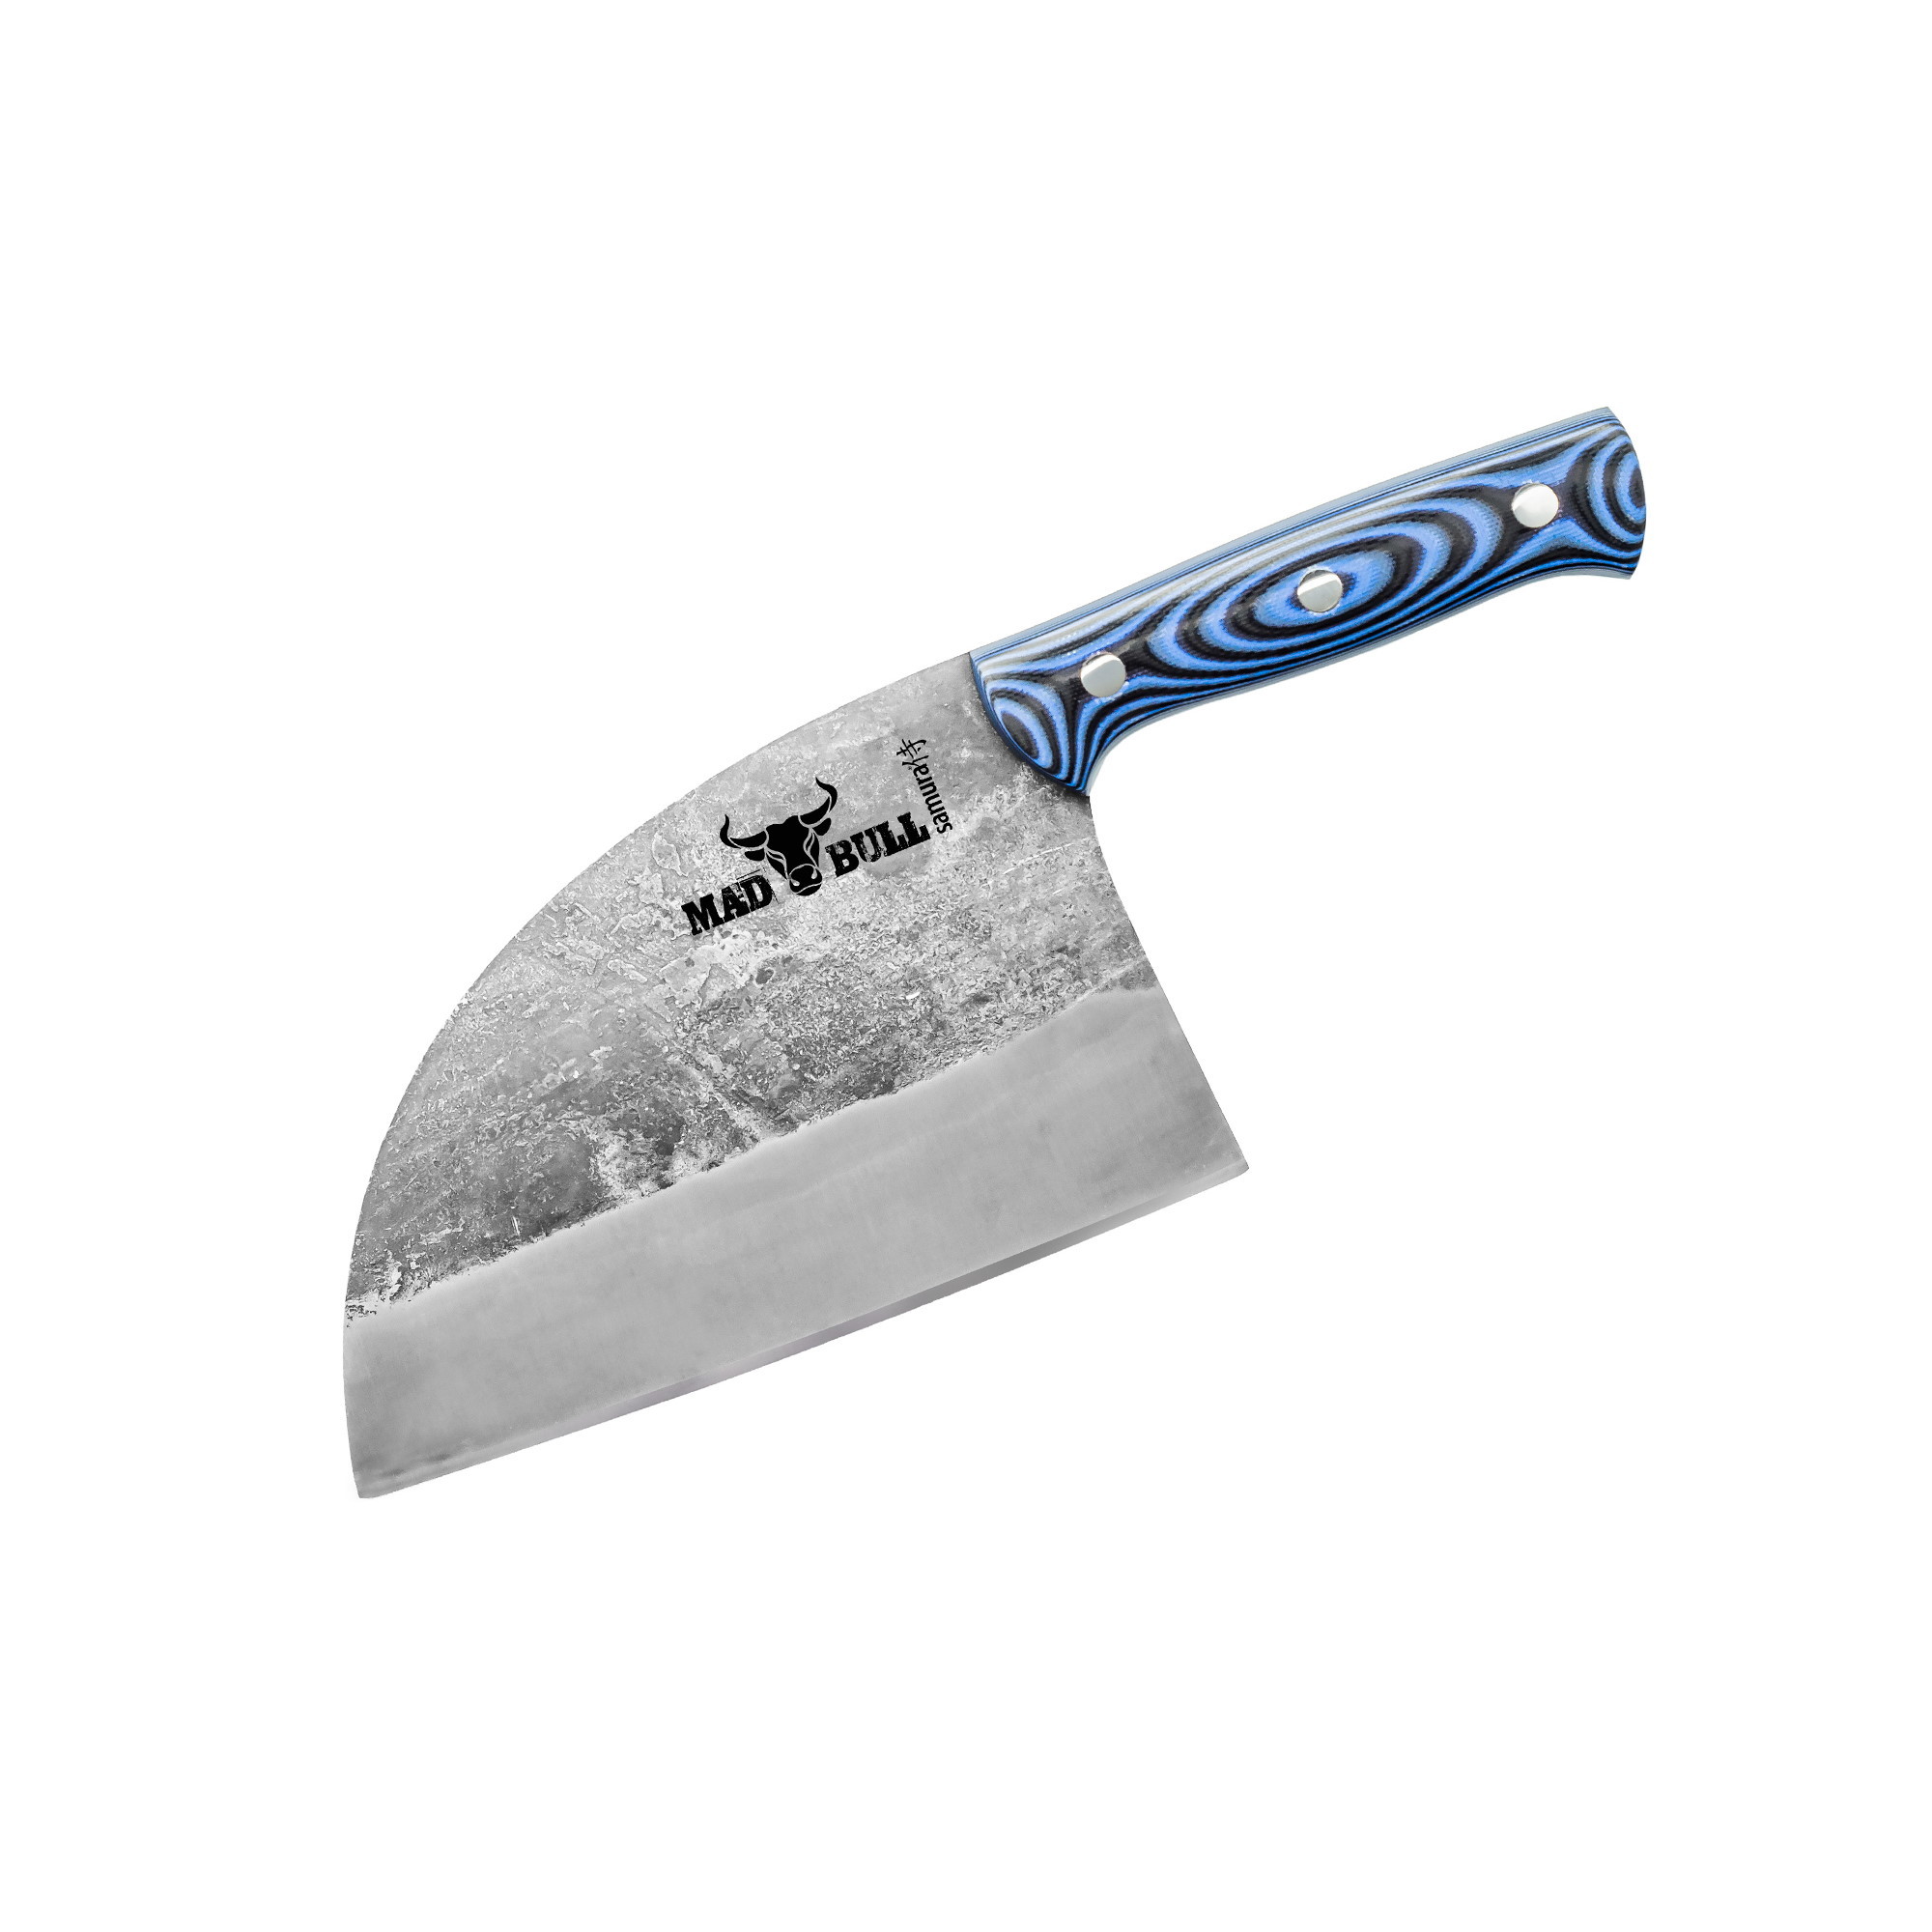 Сербский нож (топорик) Samura MAD BULL, сталь AUS-8, рукоять G10 кухонный нож топорик agness